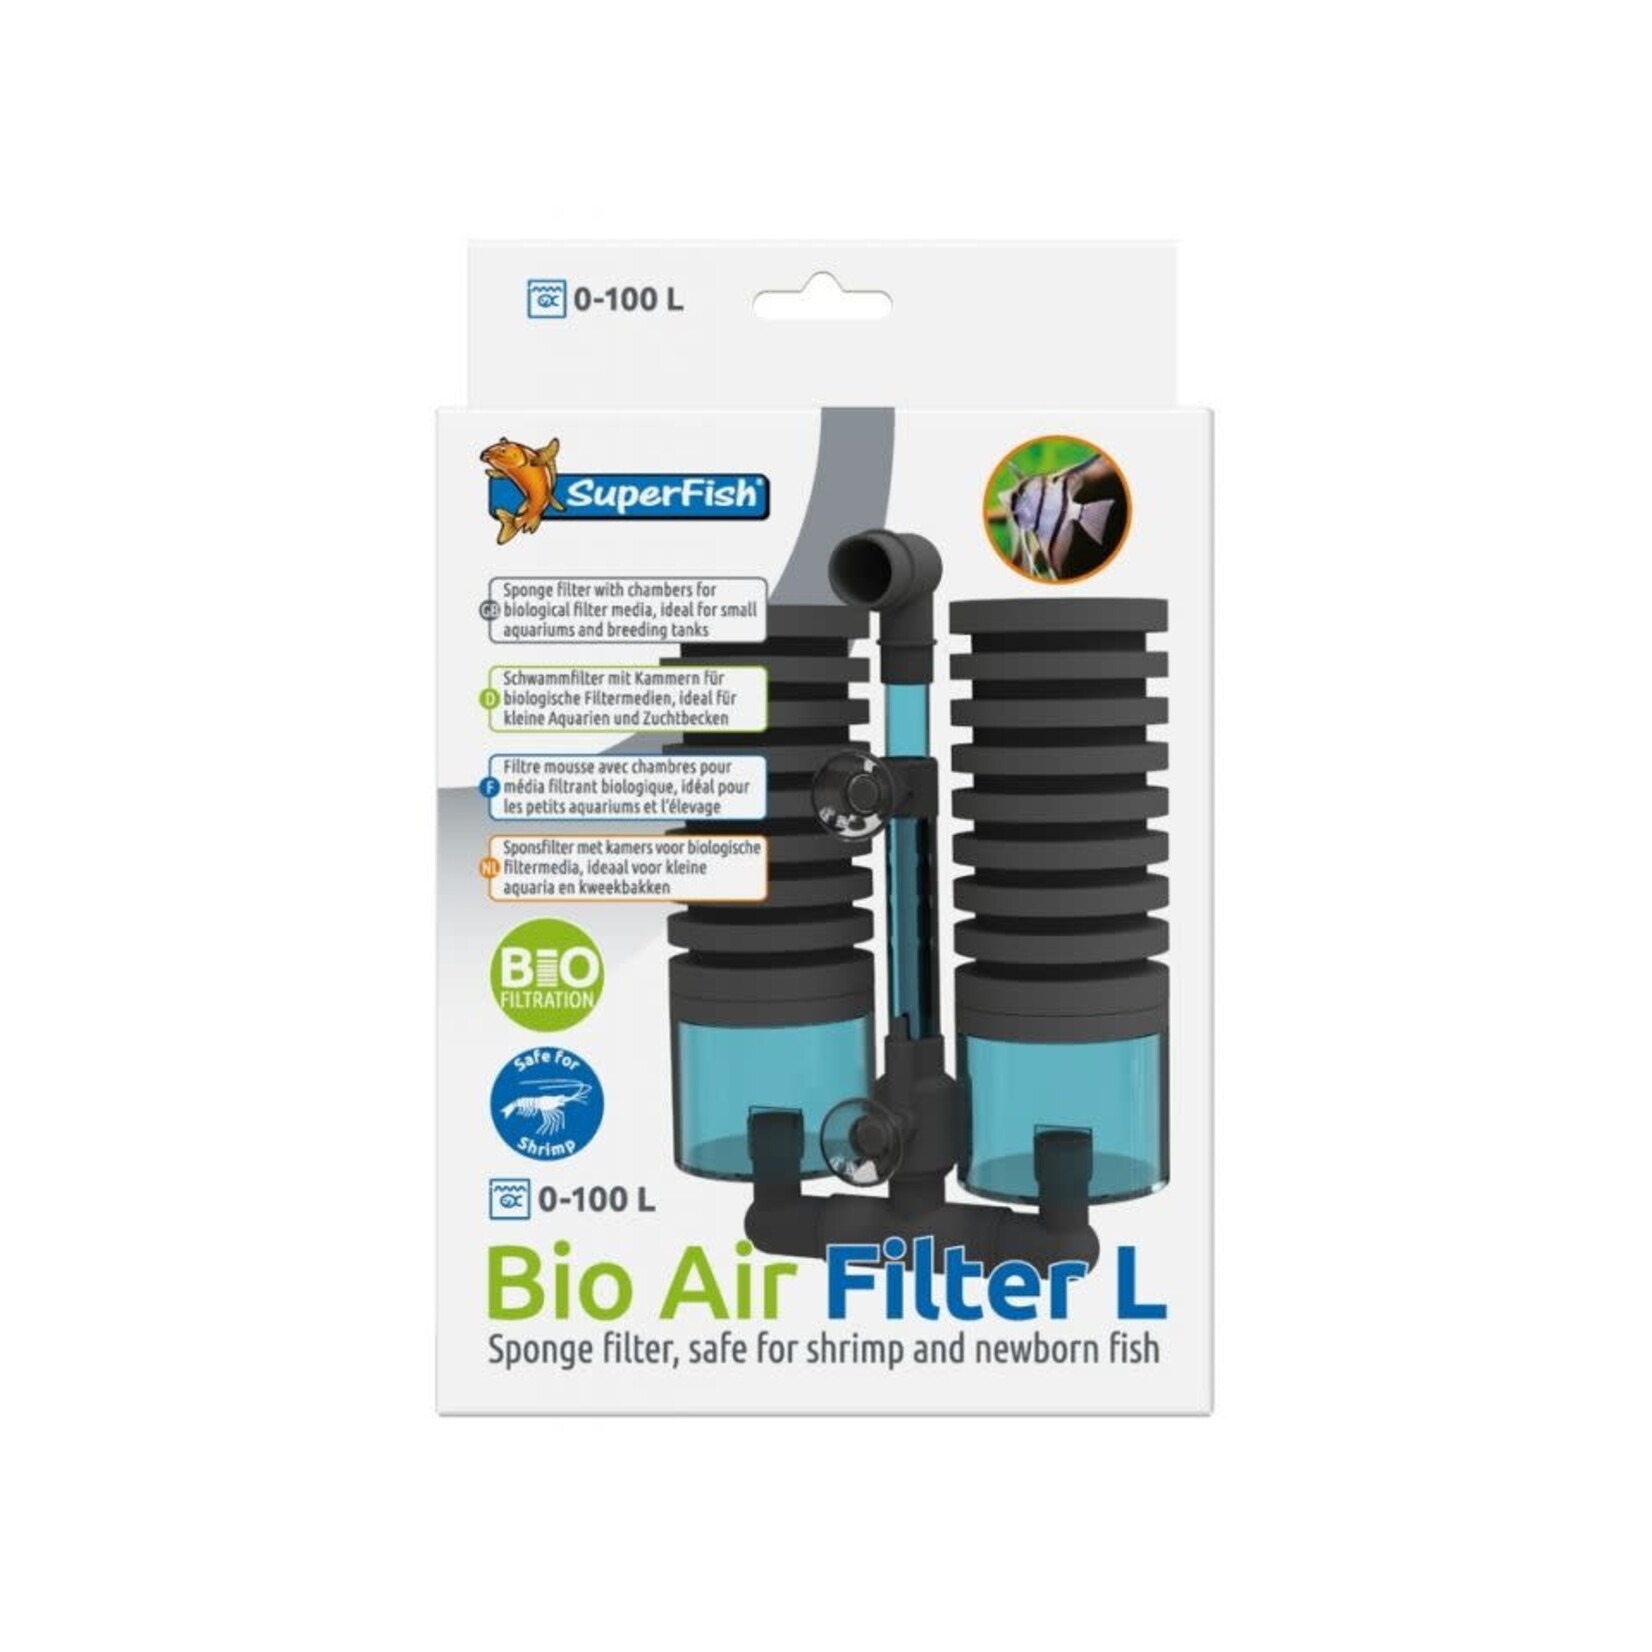 SuperFish Bio air filter l